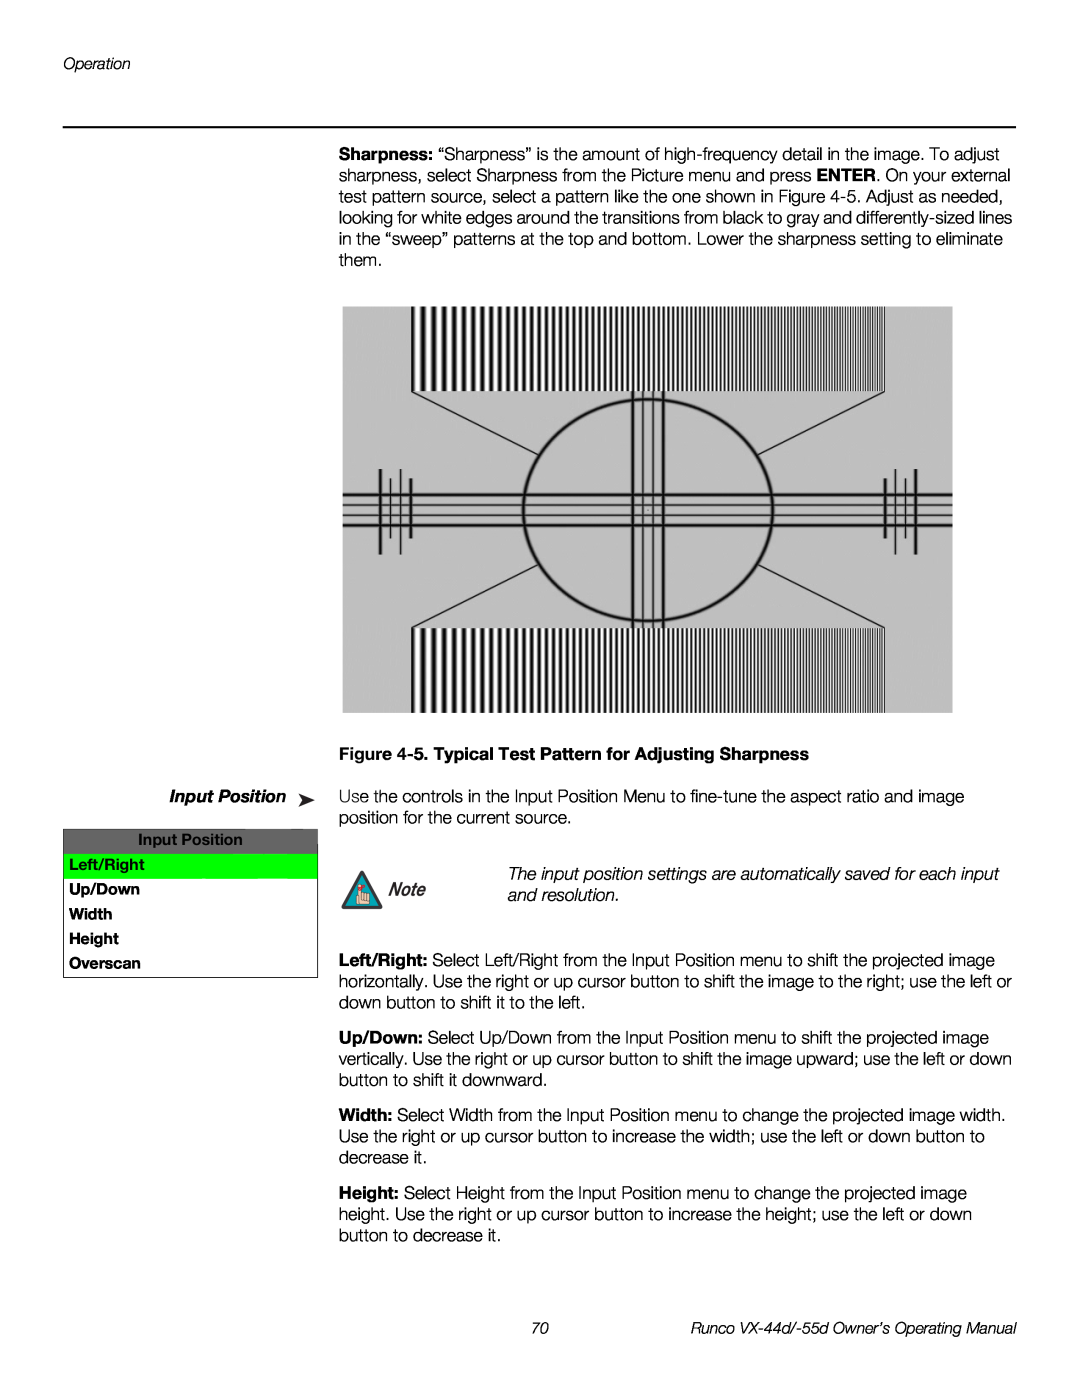 Runco VX-44D, VX-55D manual 5. Typical Test Pattern for Adjusting Sharpness, and resolution, Input Position 